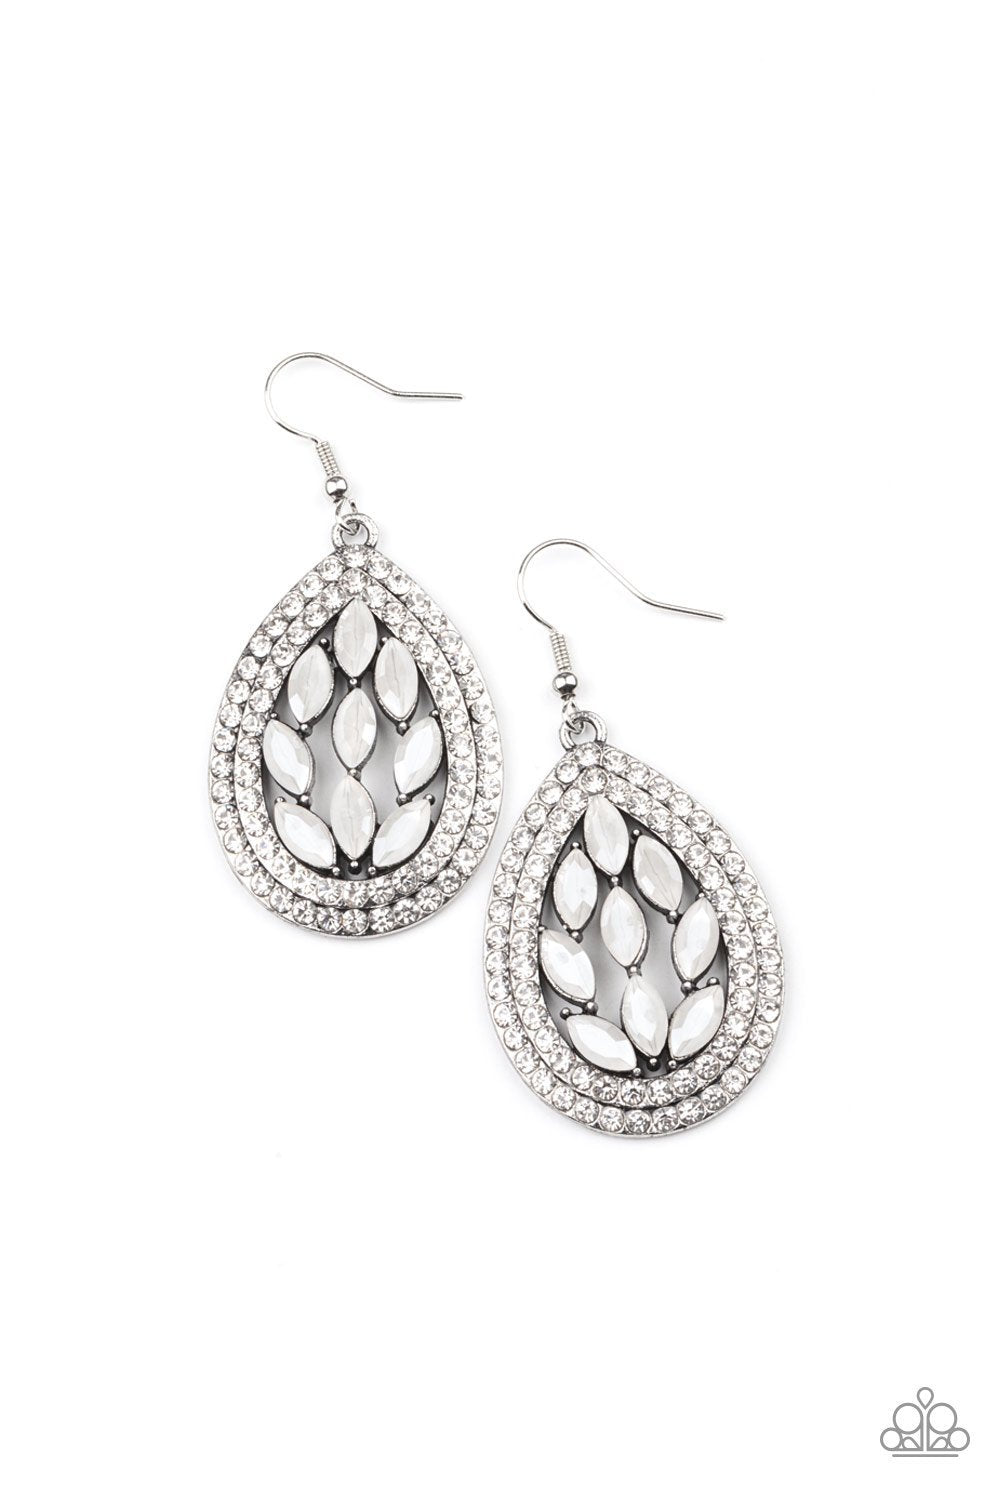 Encased Elegance Iridescent White Rhinestone Earrings - Paparazzi Accessories- lightbox - CarasShop.com - $5 Jewelry by Cara Jewels